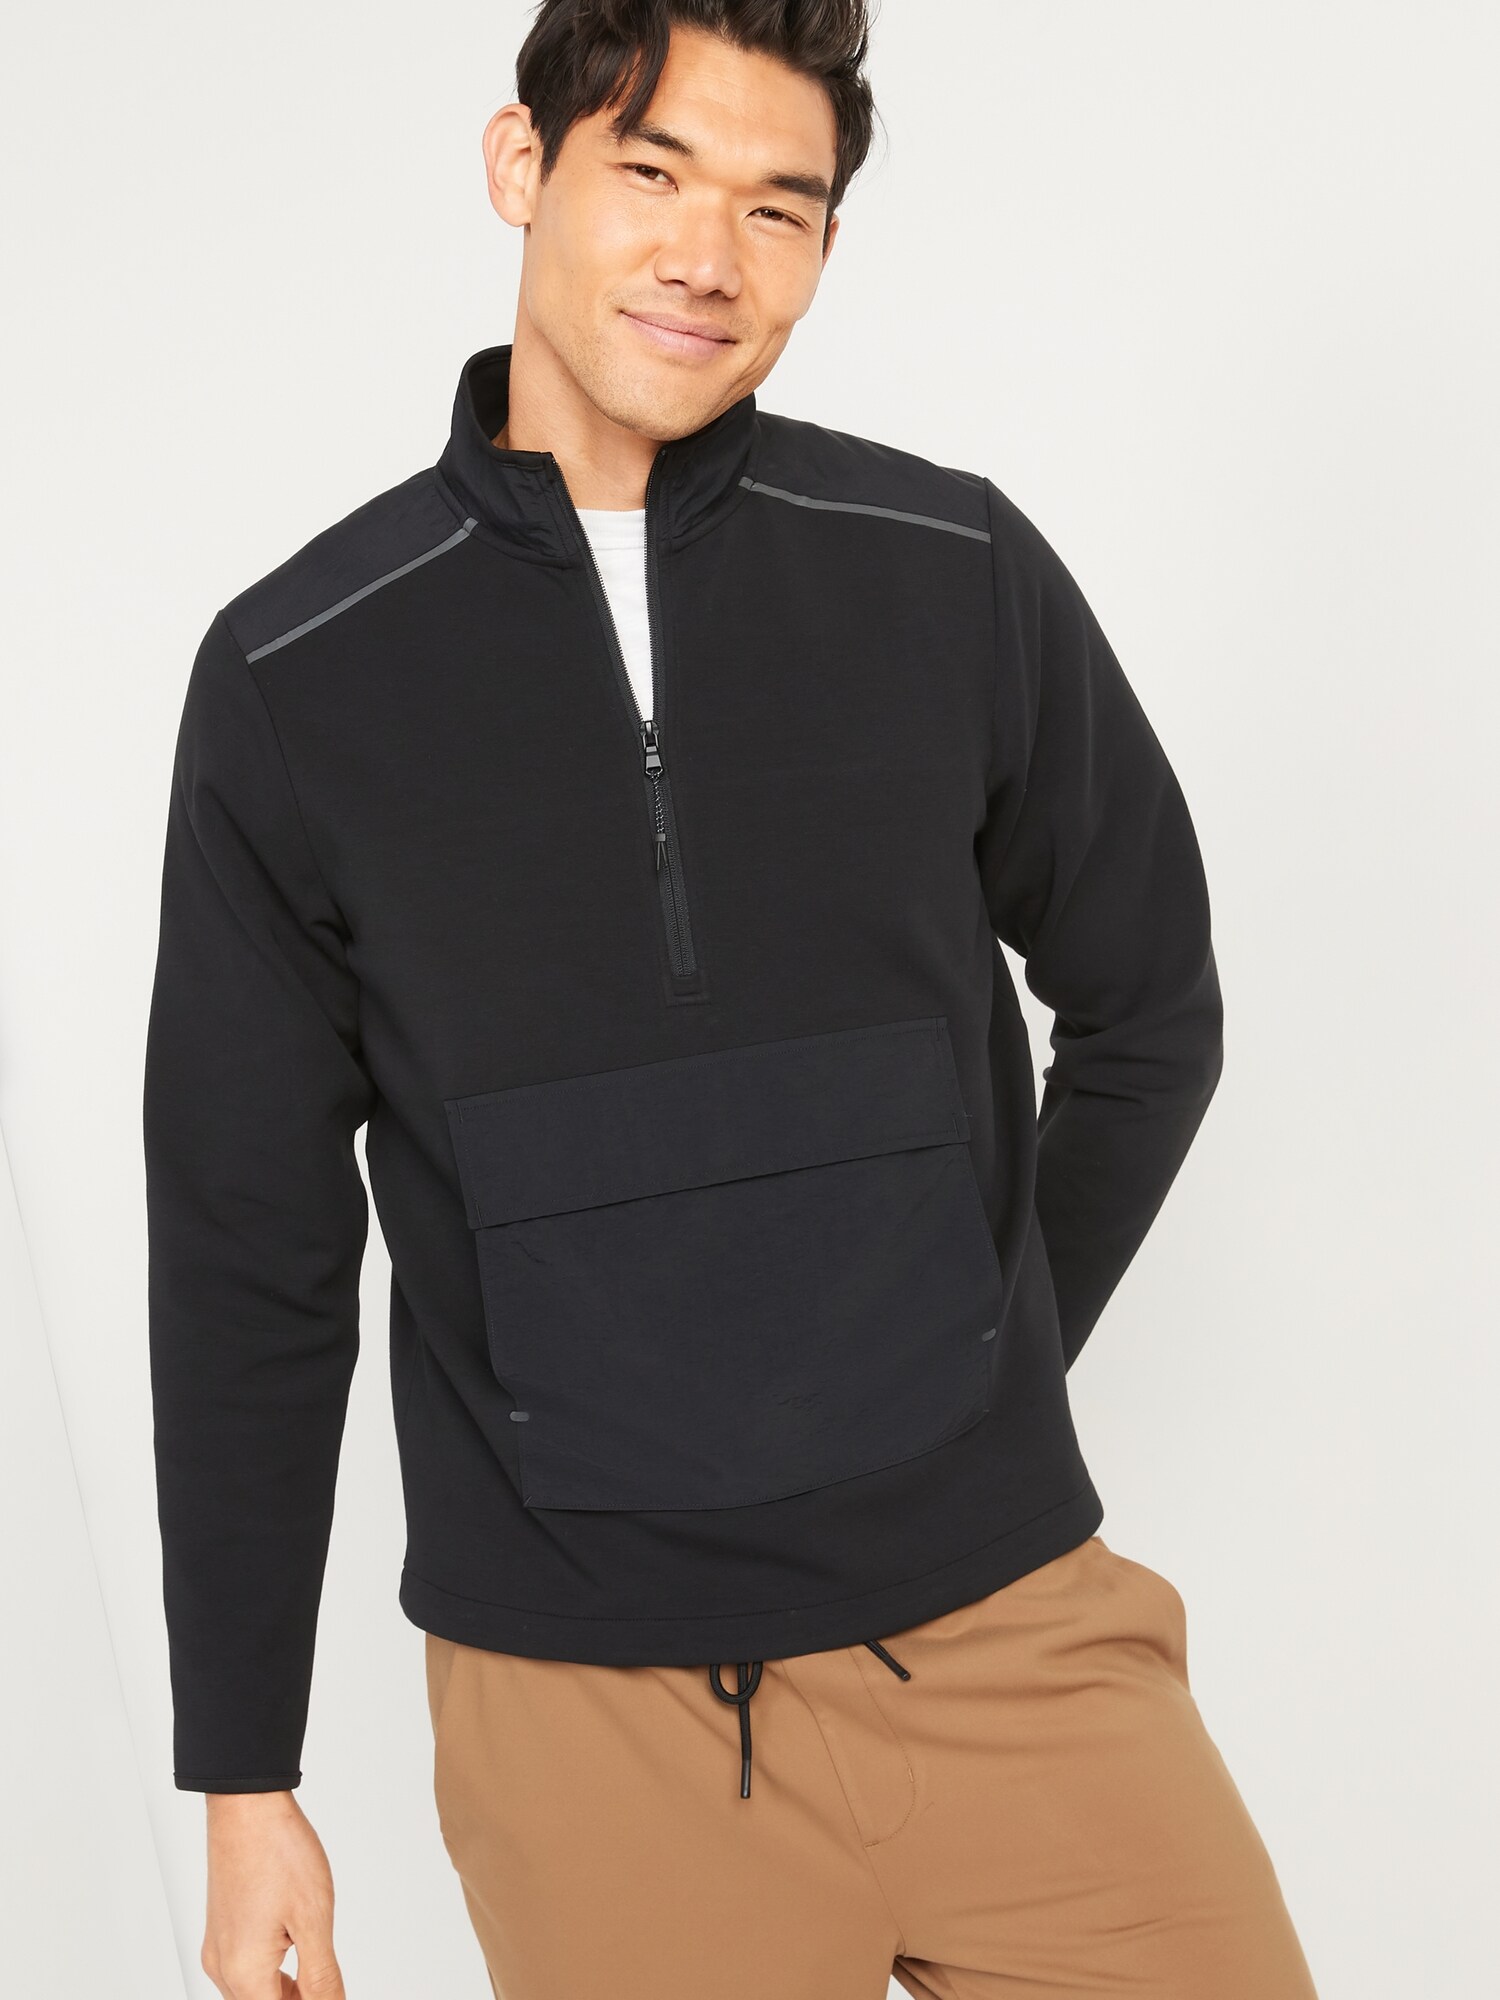 Old Navy Dynamic Fleece Hybrid Half-Zip Mock-Neck Sweatshirt for Men black. 1